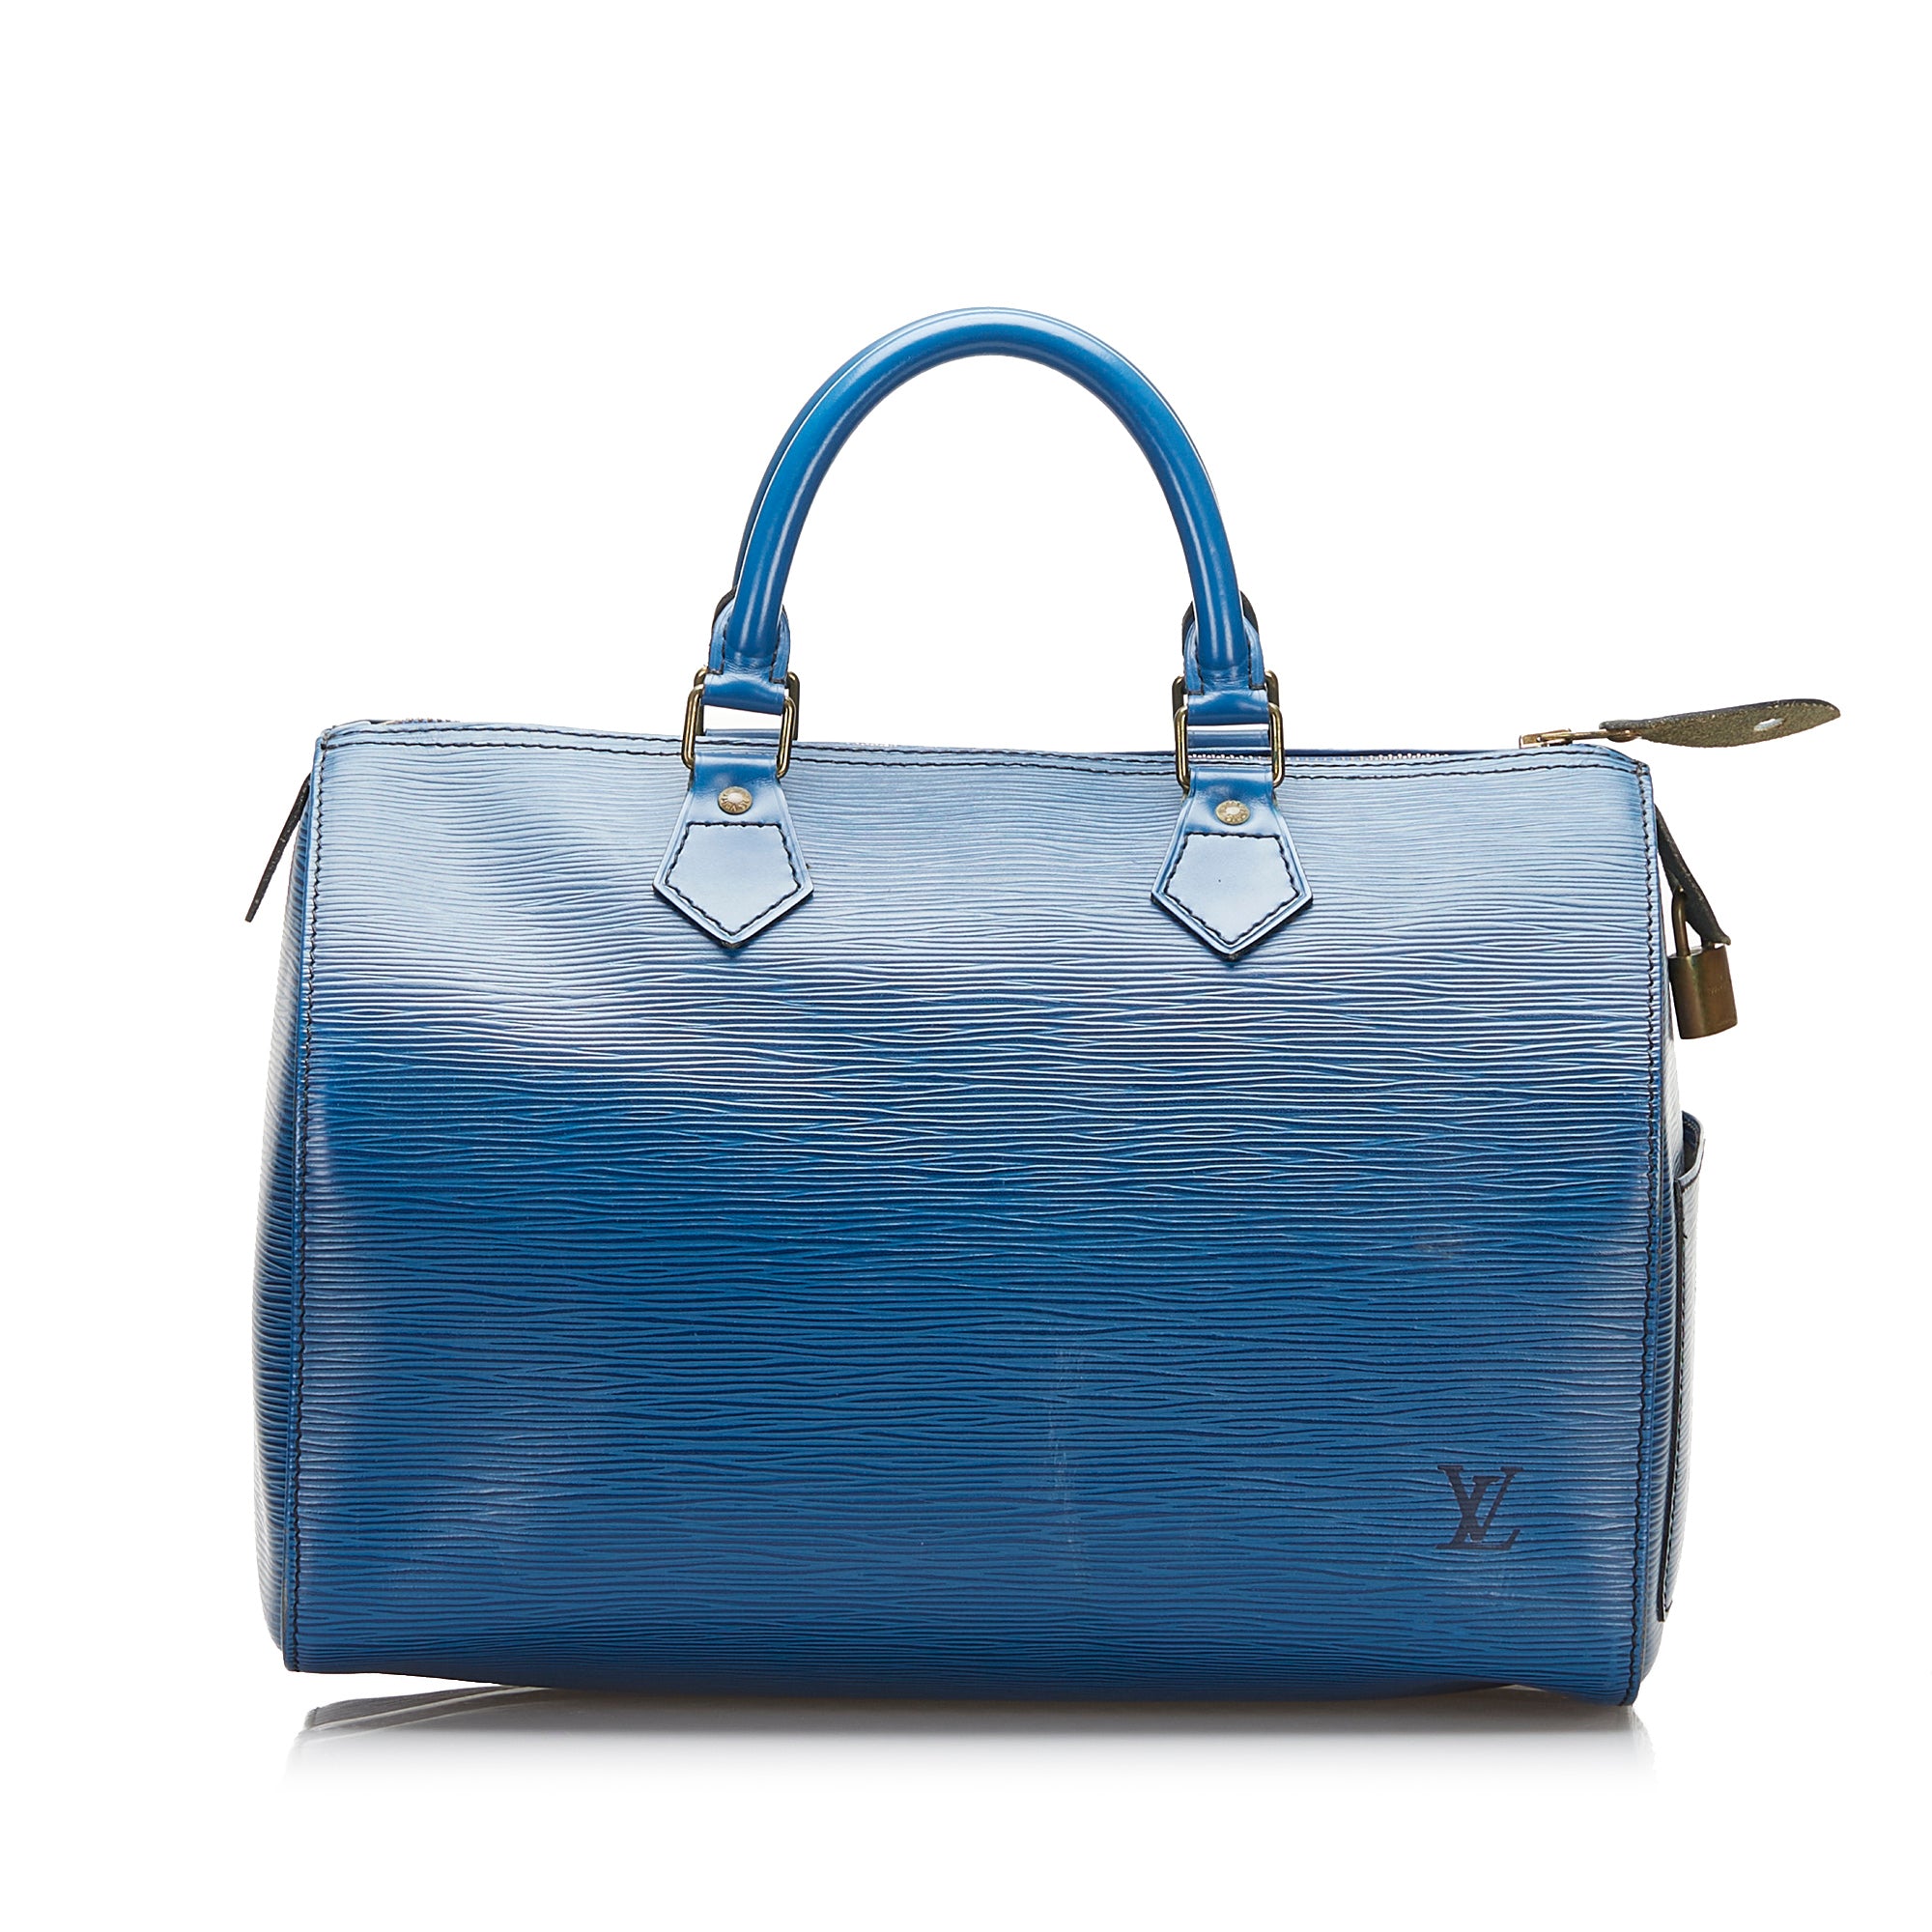 Louis Vuitton Epi Speedy 30 Handbag bag Color Green used from